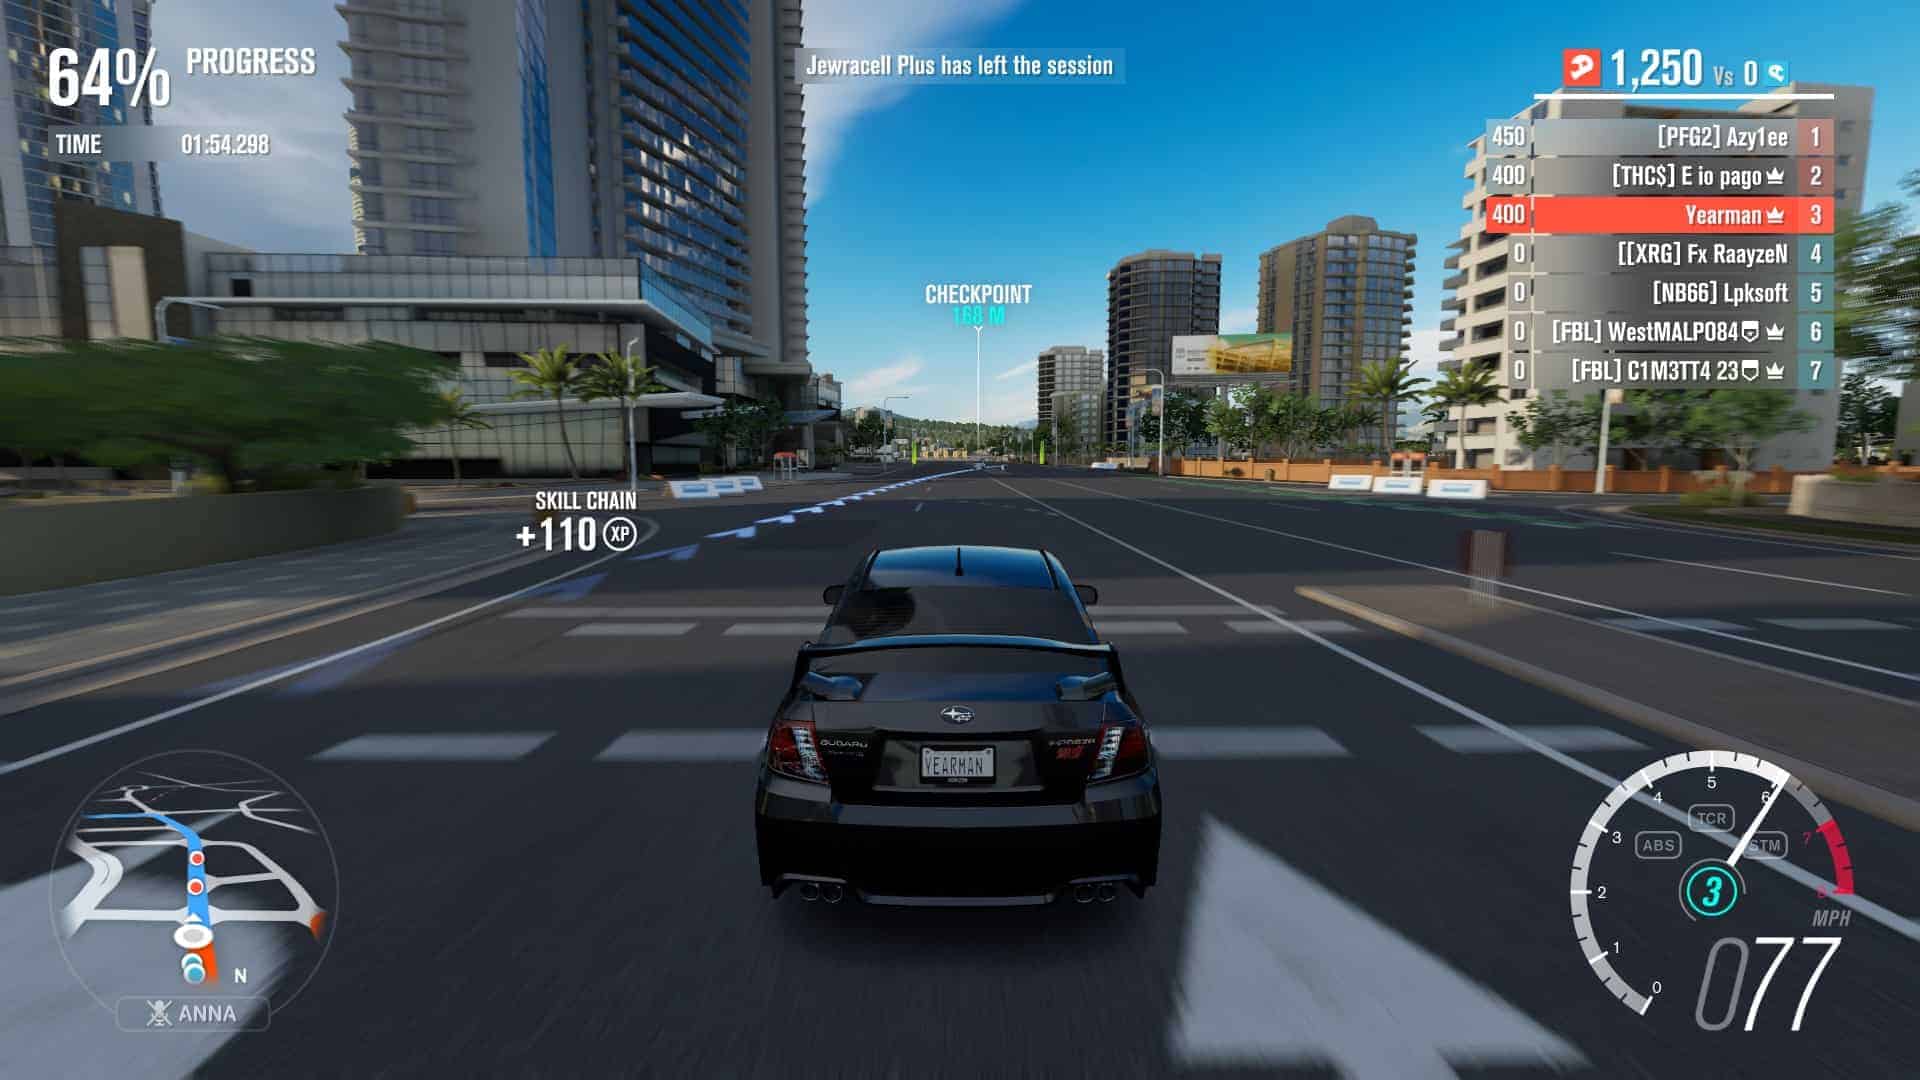 Forza Horizon 1 Pc Registration Code